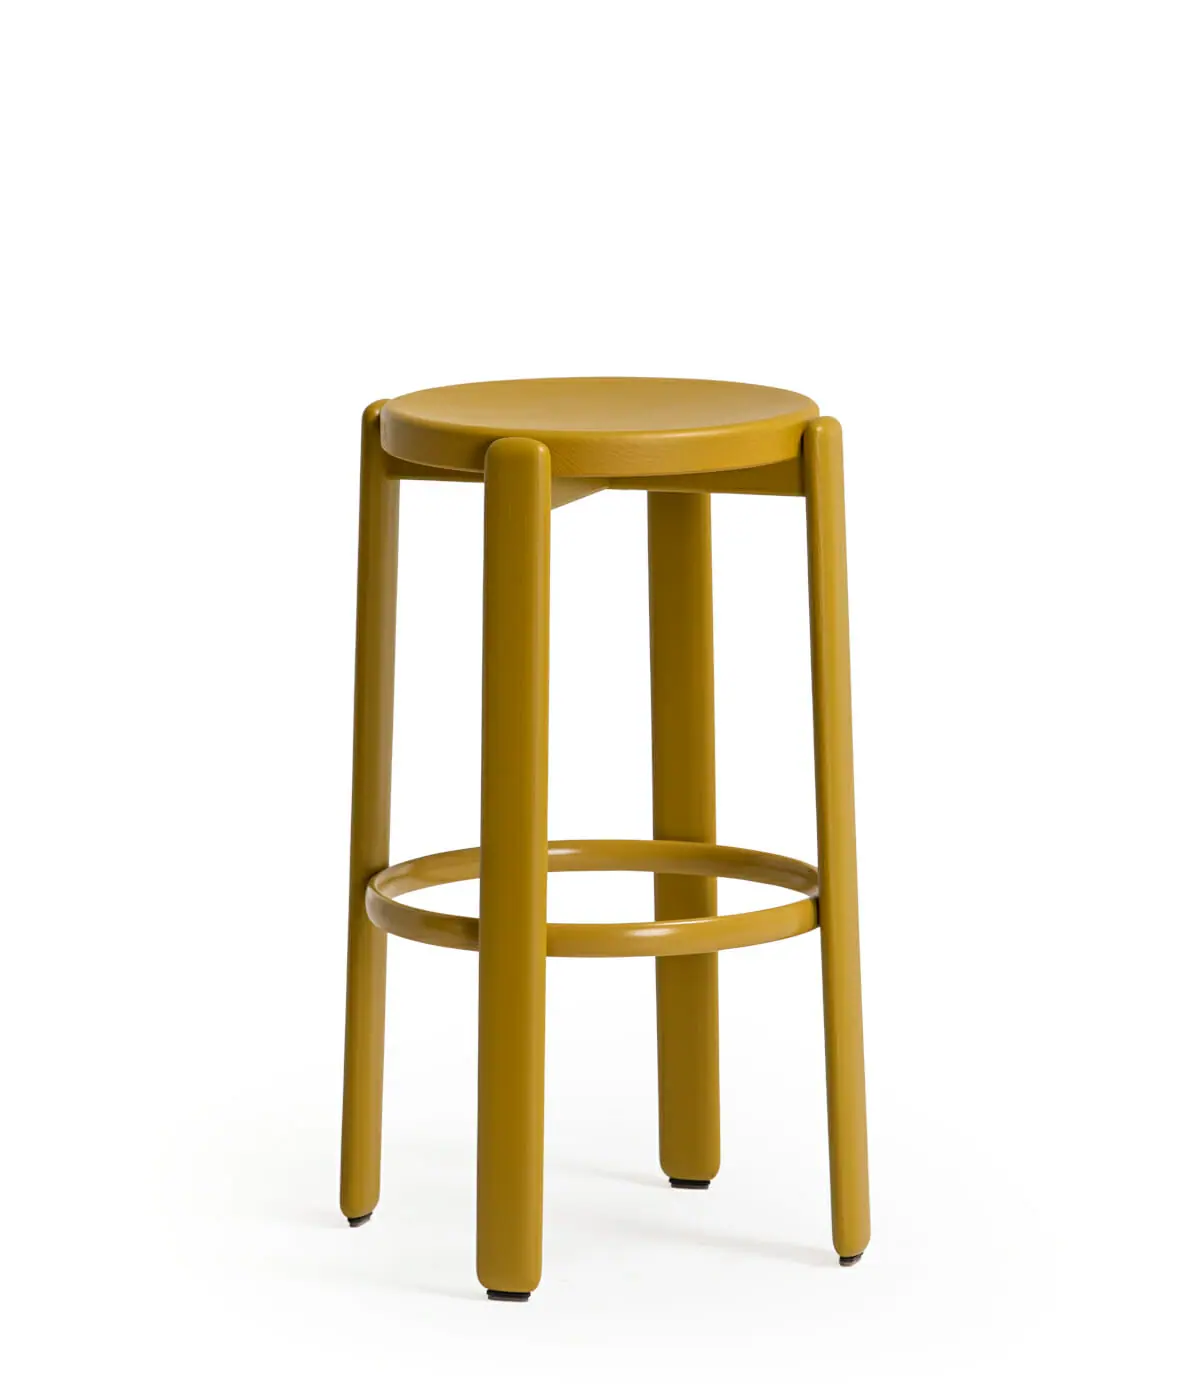 83908-83904-tura-chair-stools